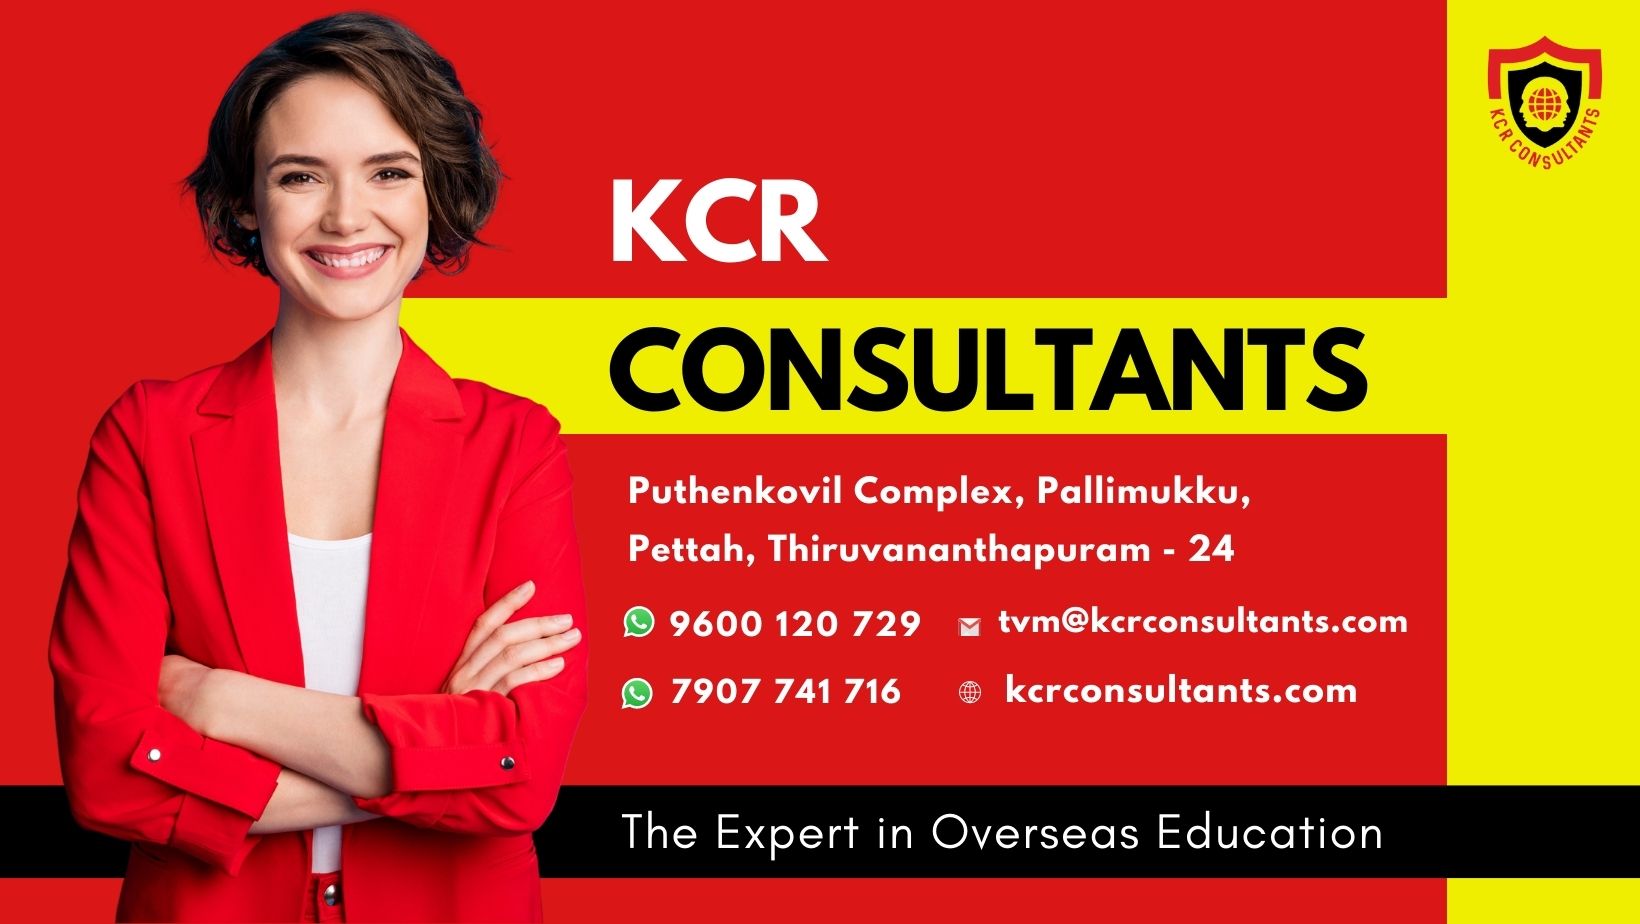 KCR CONSULTANTS TRIVANDRUM KERALA - OVERSEAS EDUCATION CONSULTANT